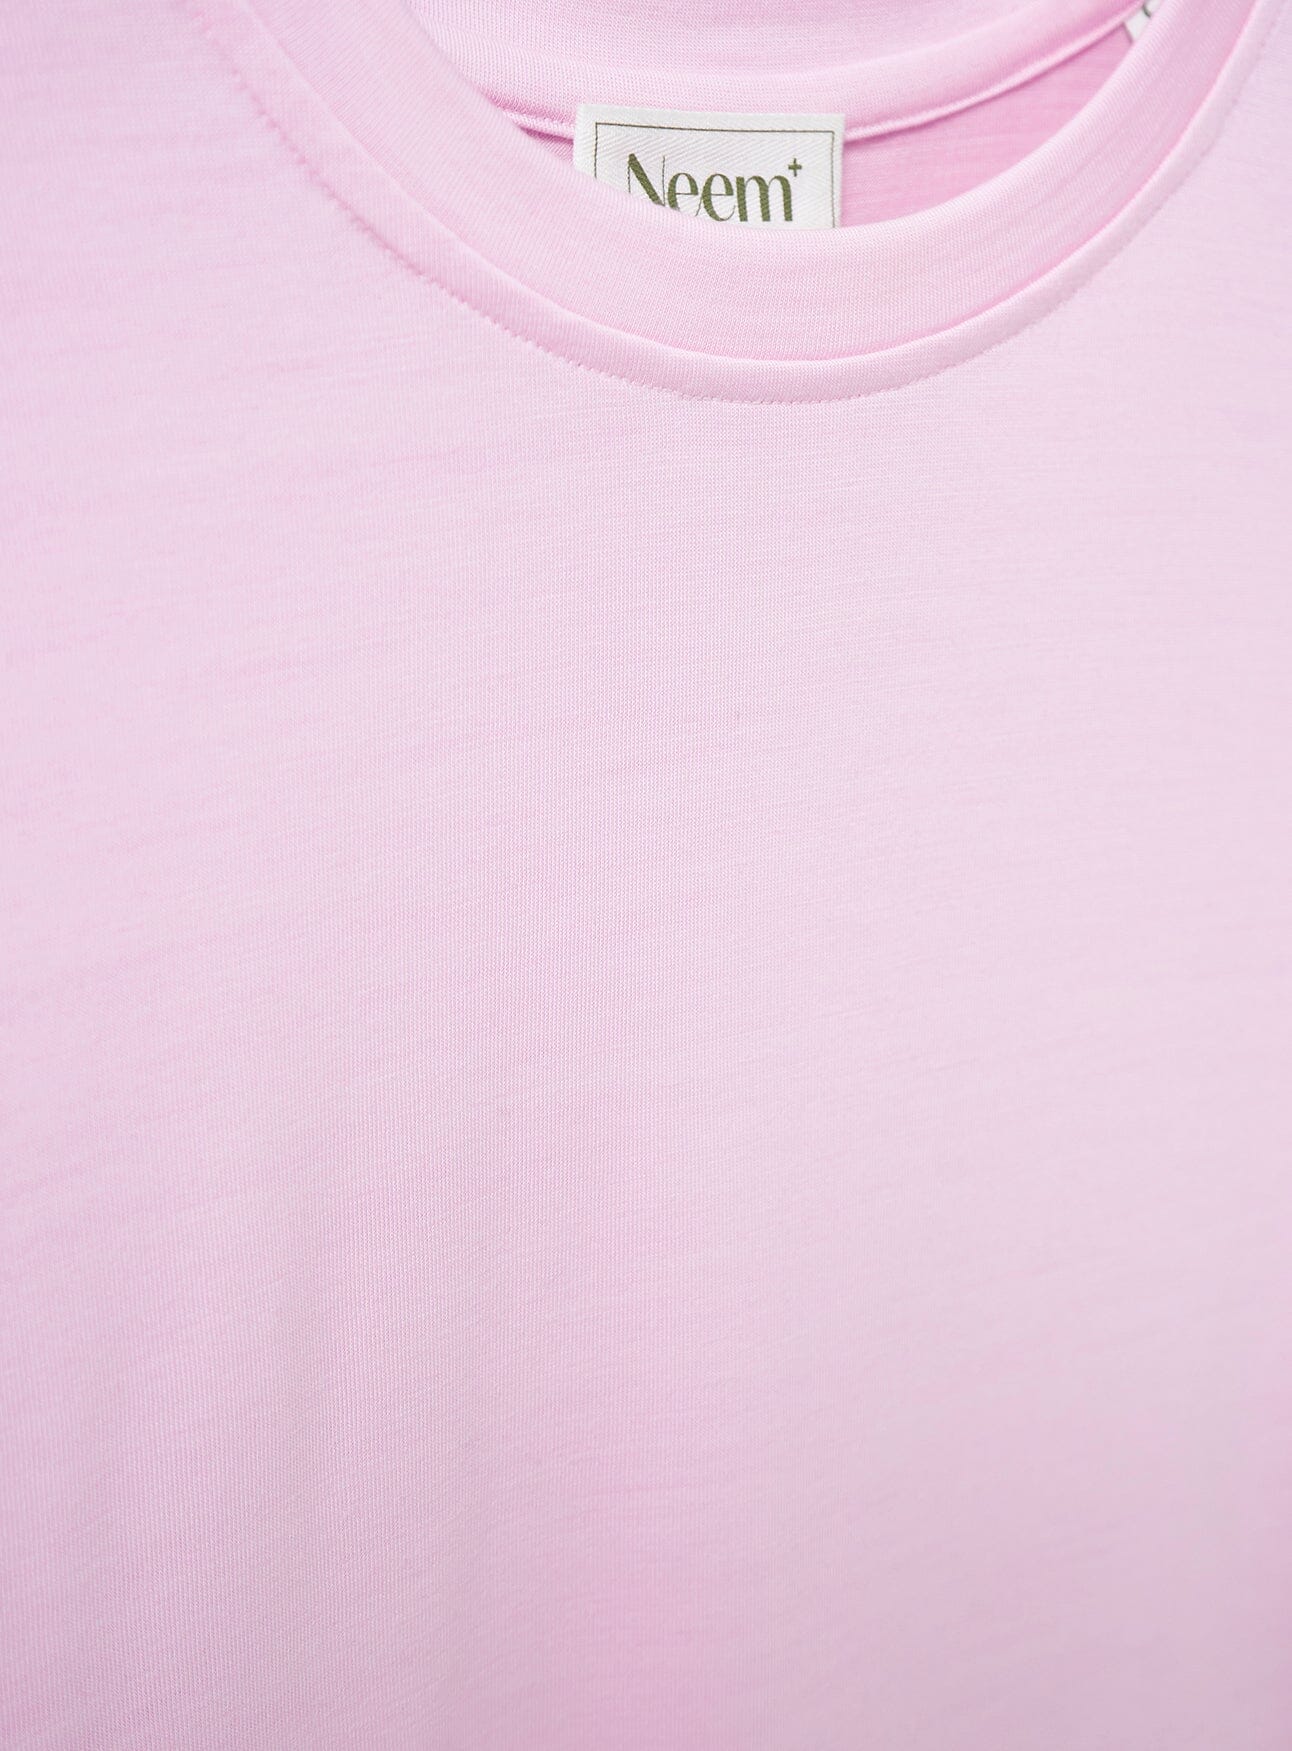 ZQ Merino Wool Jersey Pink Neem T-Shirt